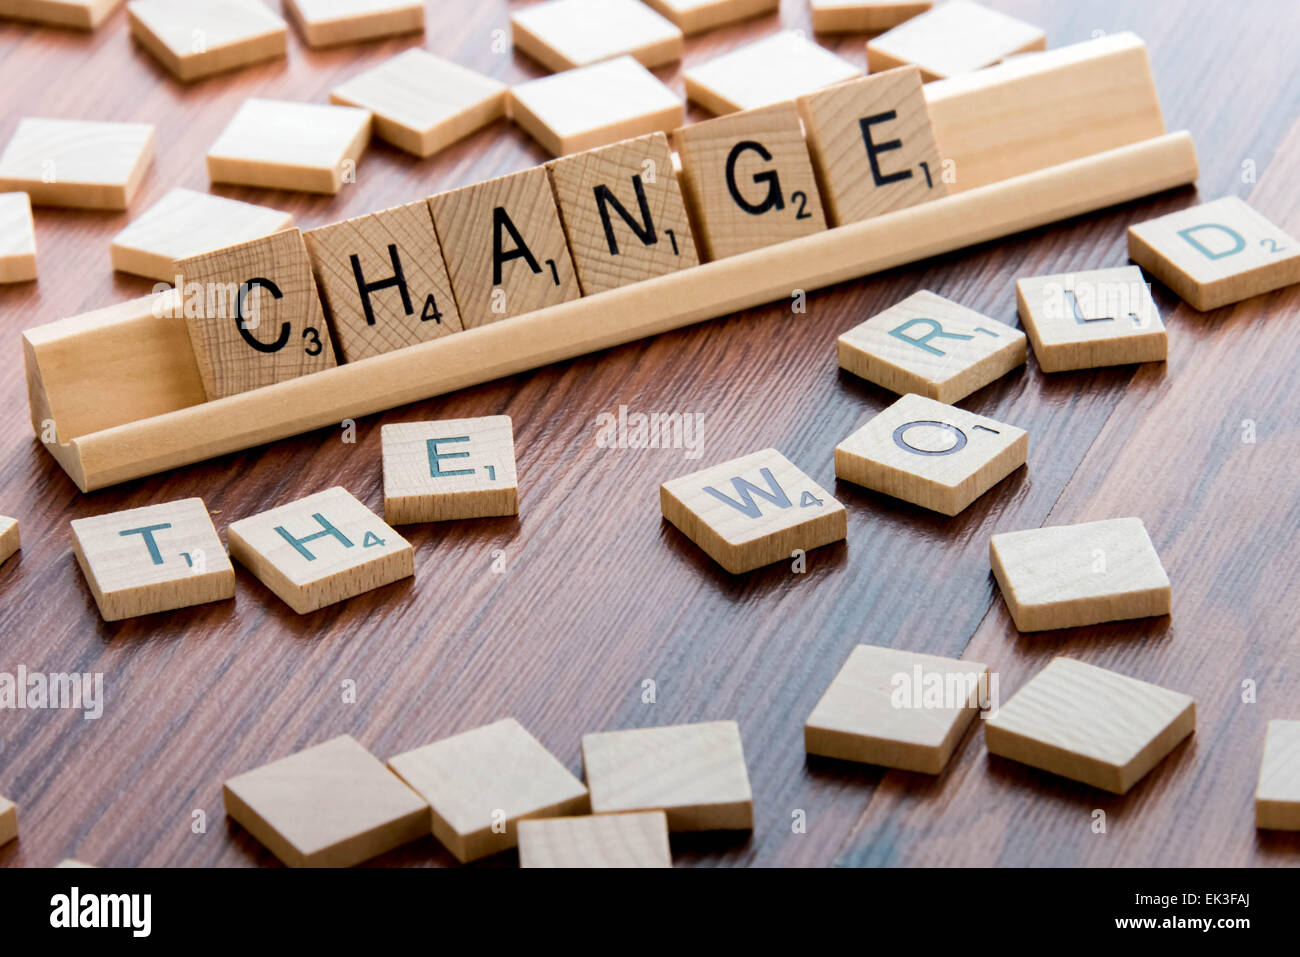 April 4, 2015:  Houston, TX, USA - Scrabble Word Game wood tiles spelling CHANGE THE WORLD Stock Photo